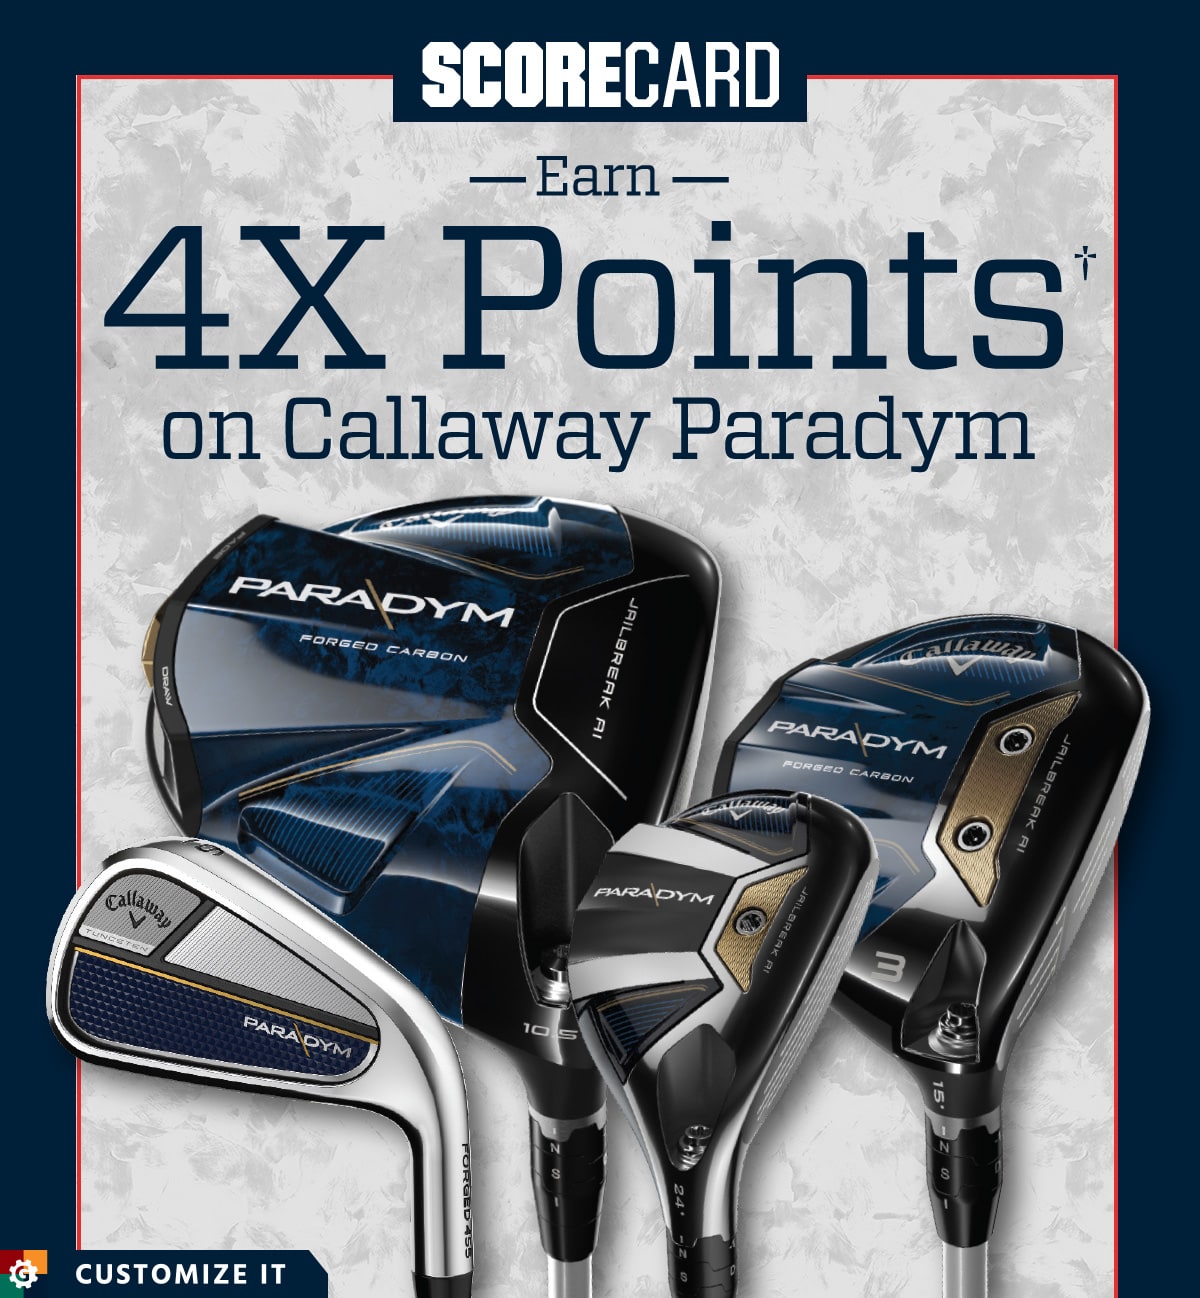  ScoreCard. Earn 4 times points† on Callaway Paradym. Customize it.